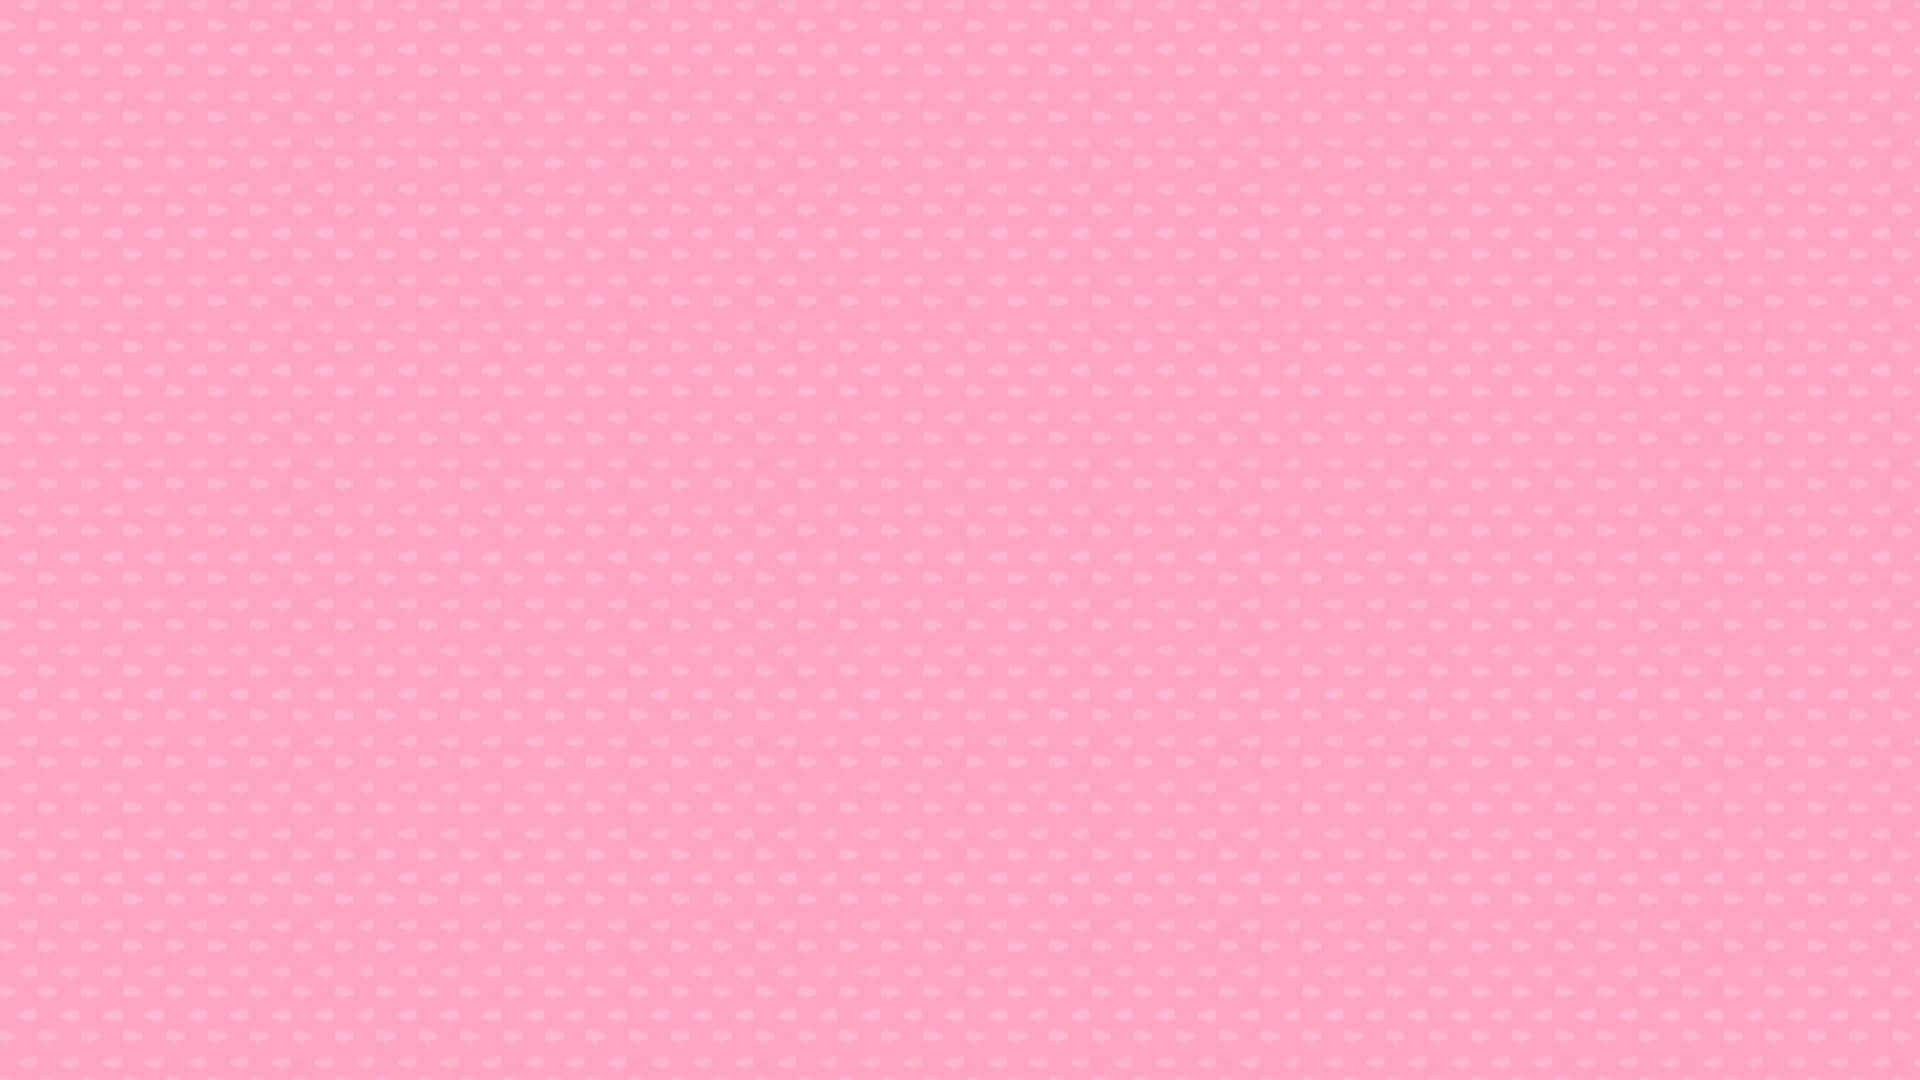 Plain Pink Desktop Wallpaper